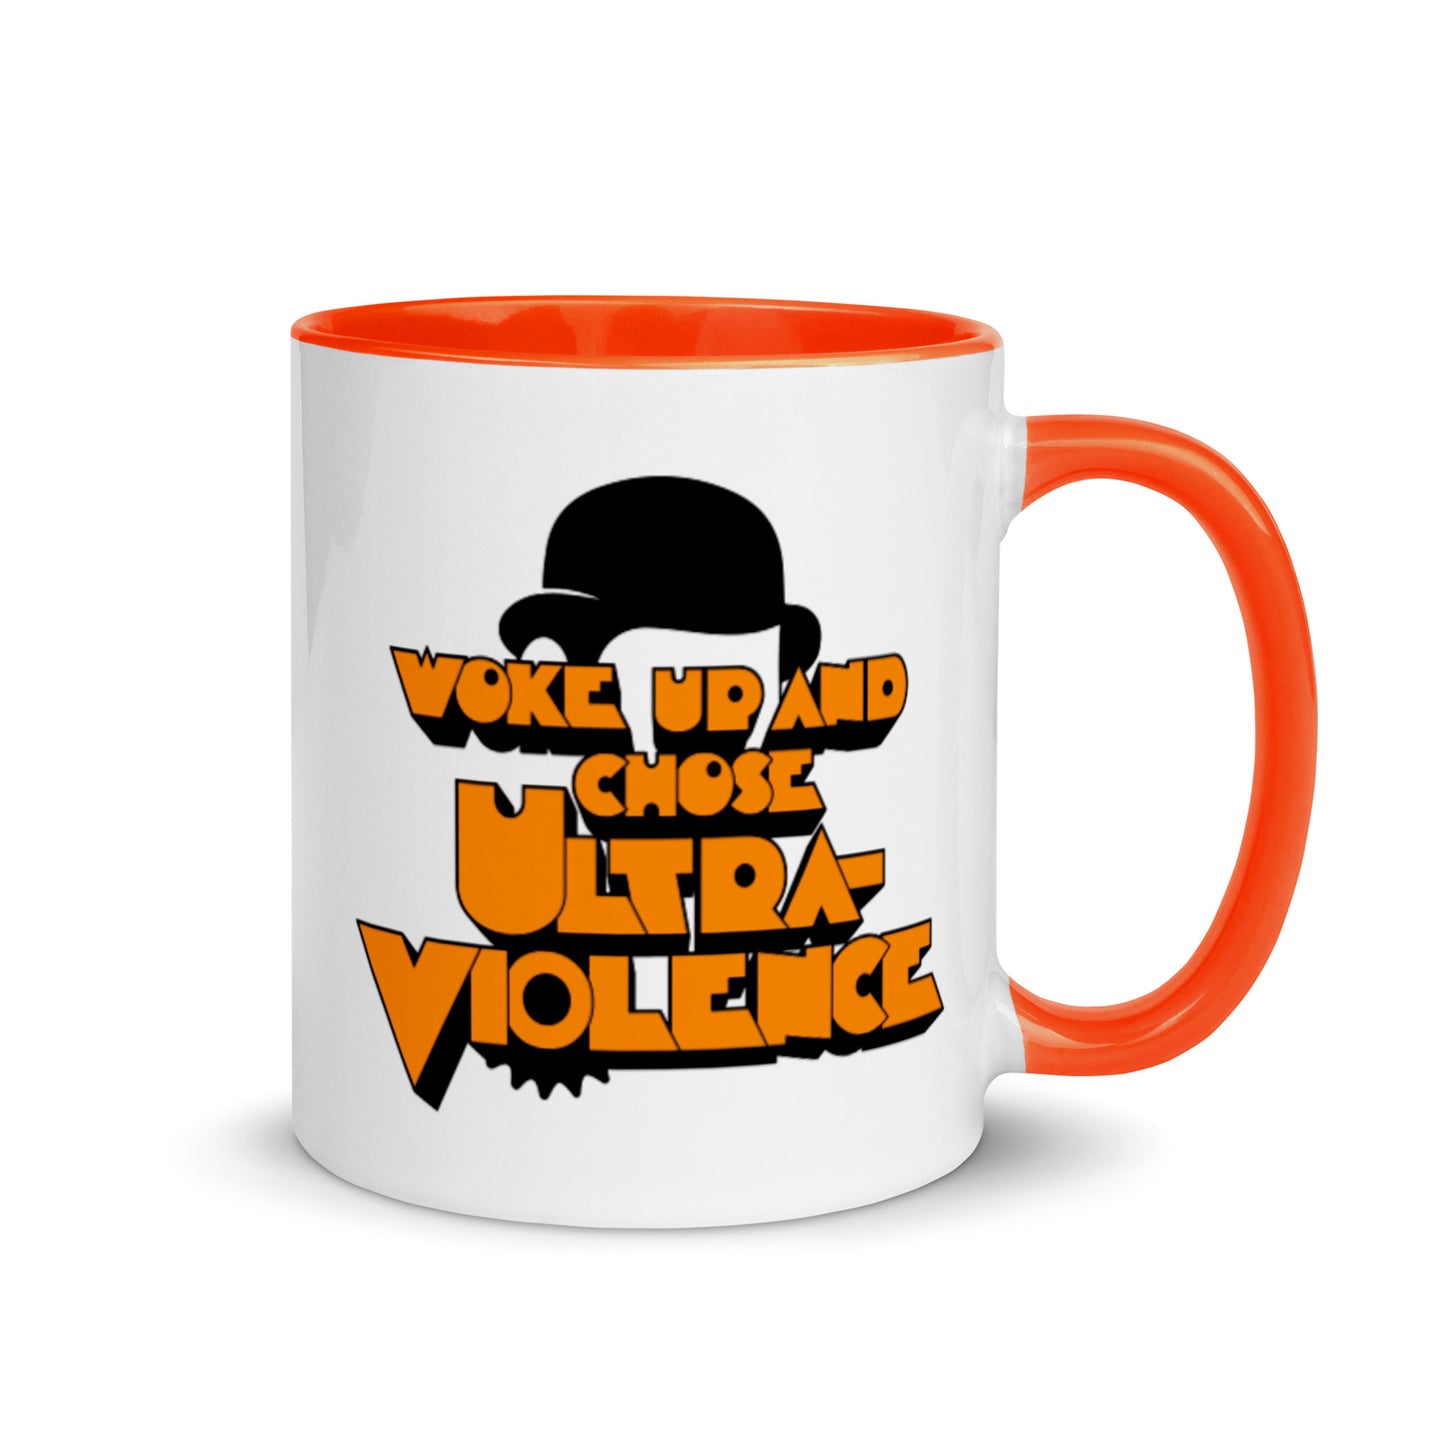 Woke Up and Chose Ultra-Violence 2-color ceramic mug